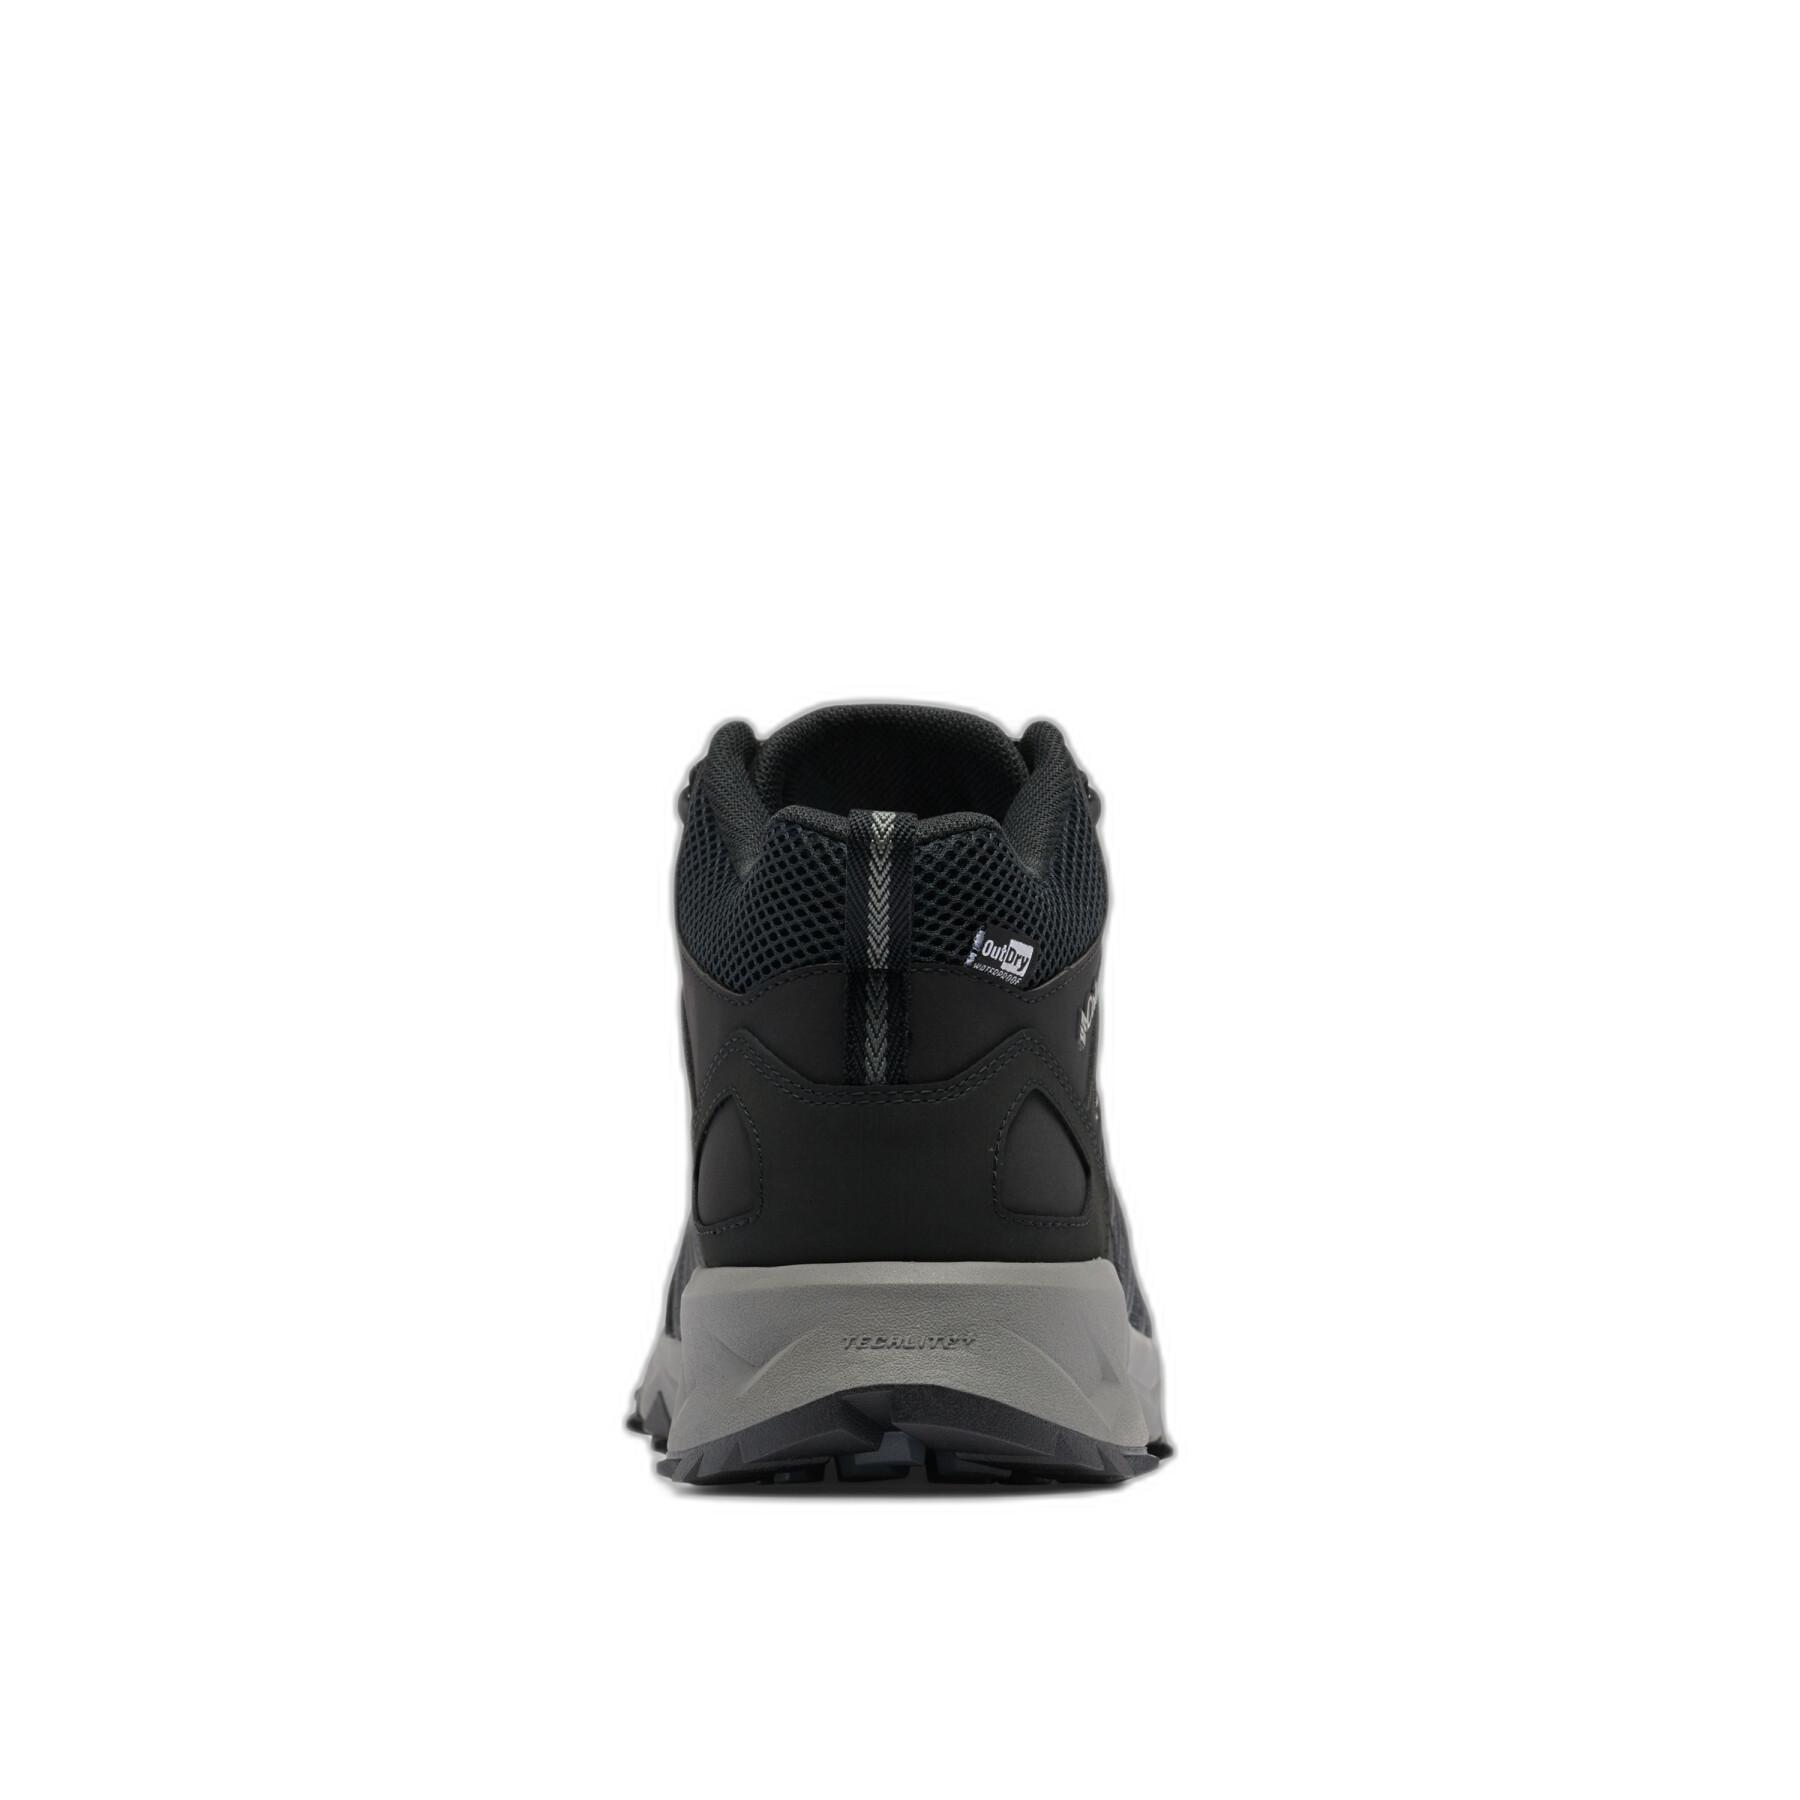 Columbia Peakfreak™ II Mid Outdry™ hiking boots